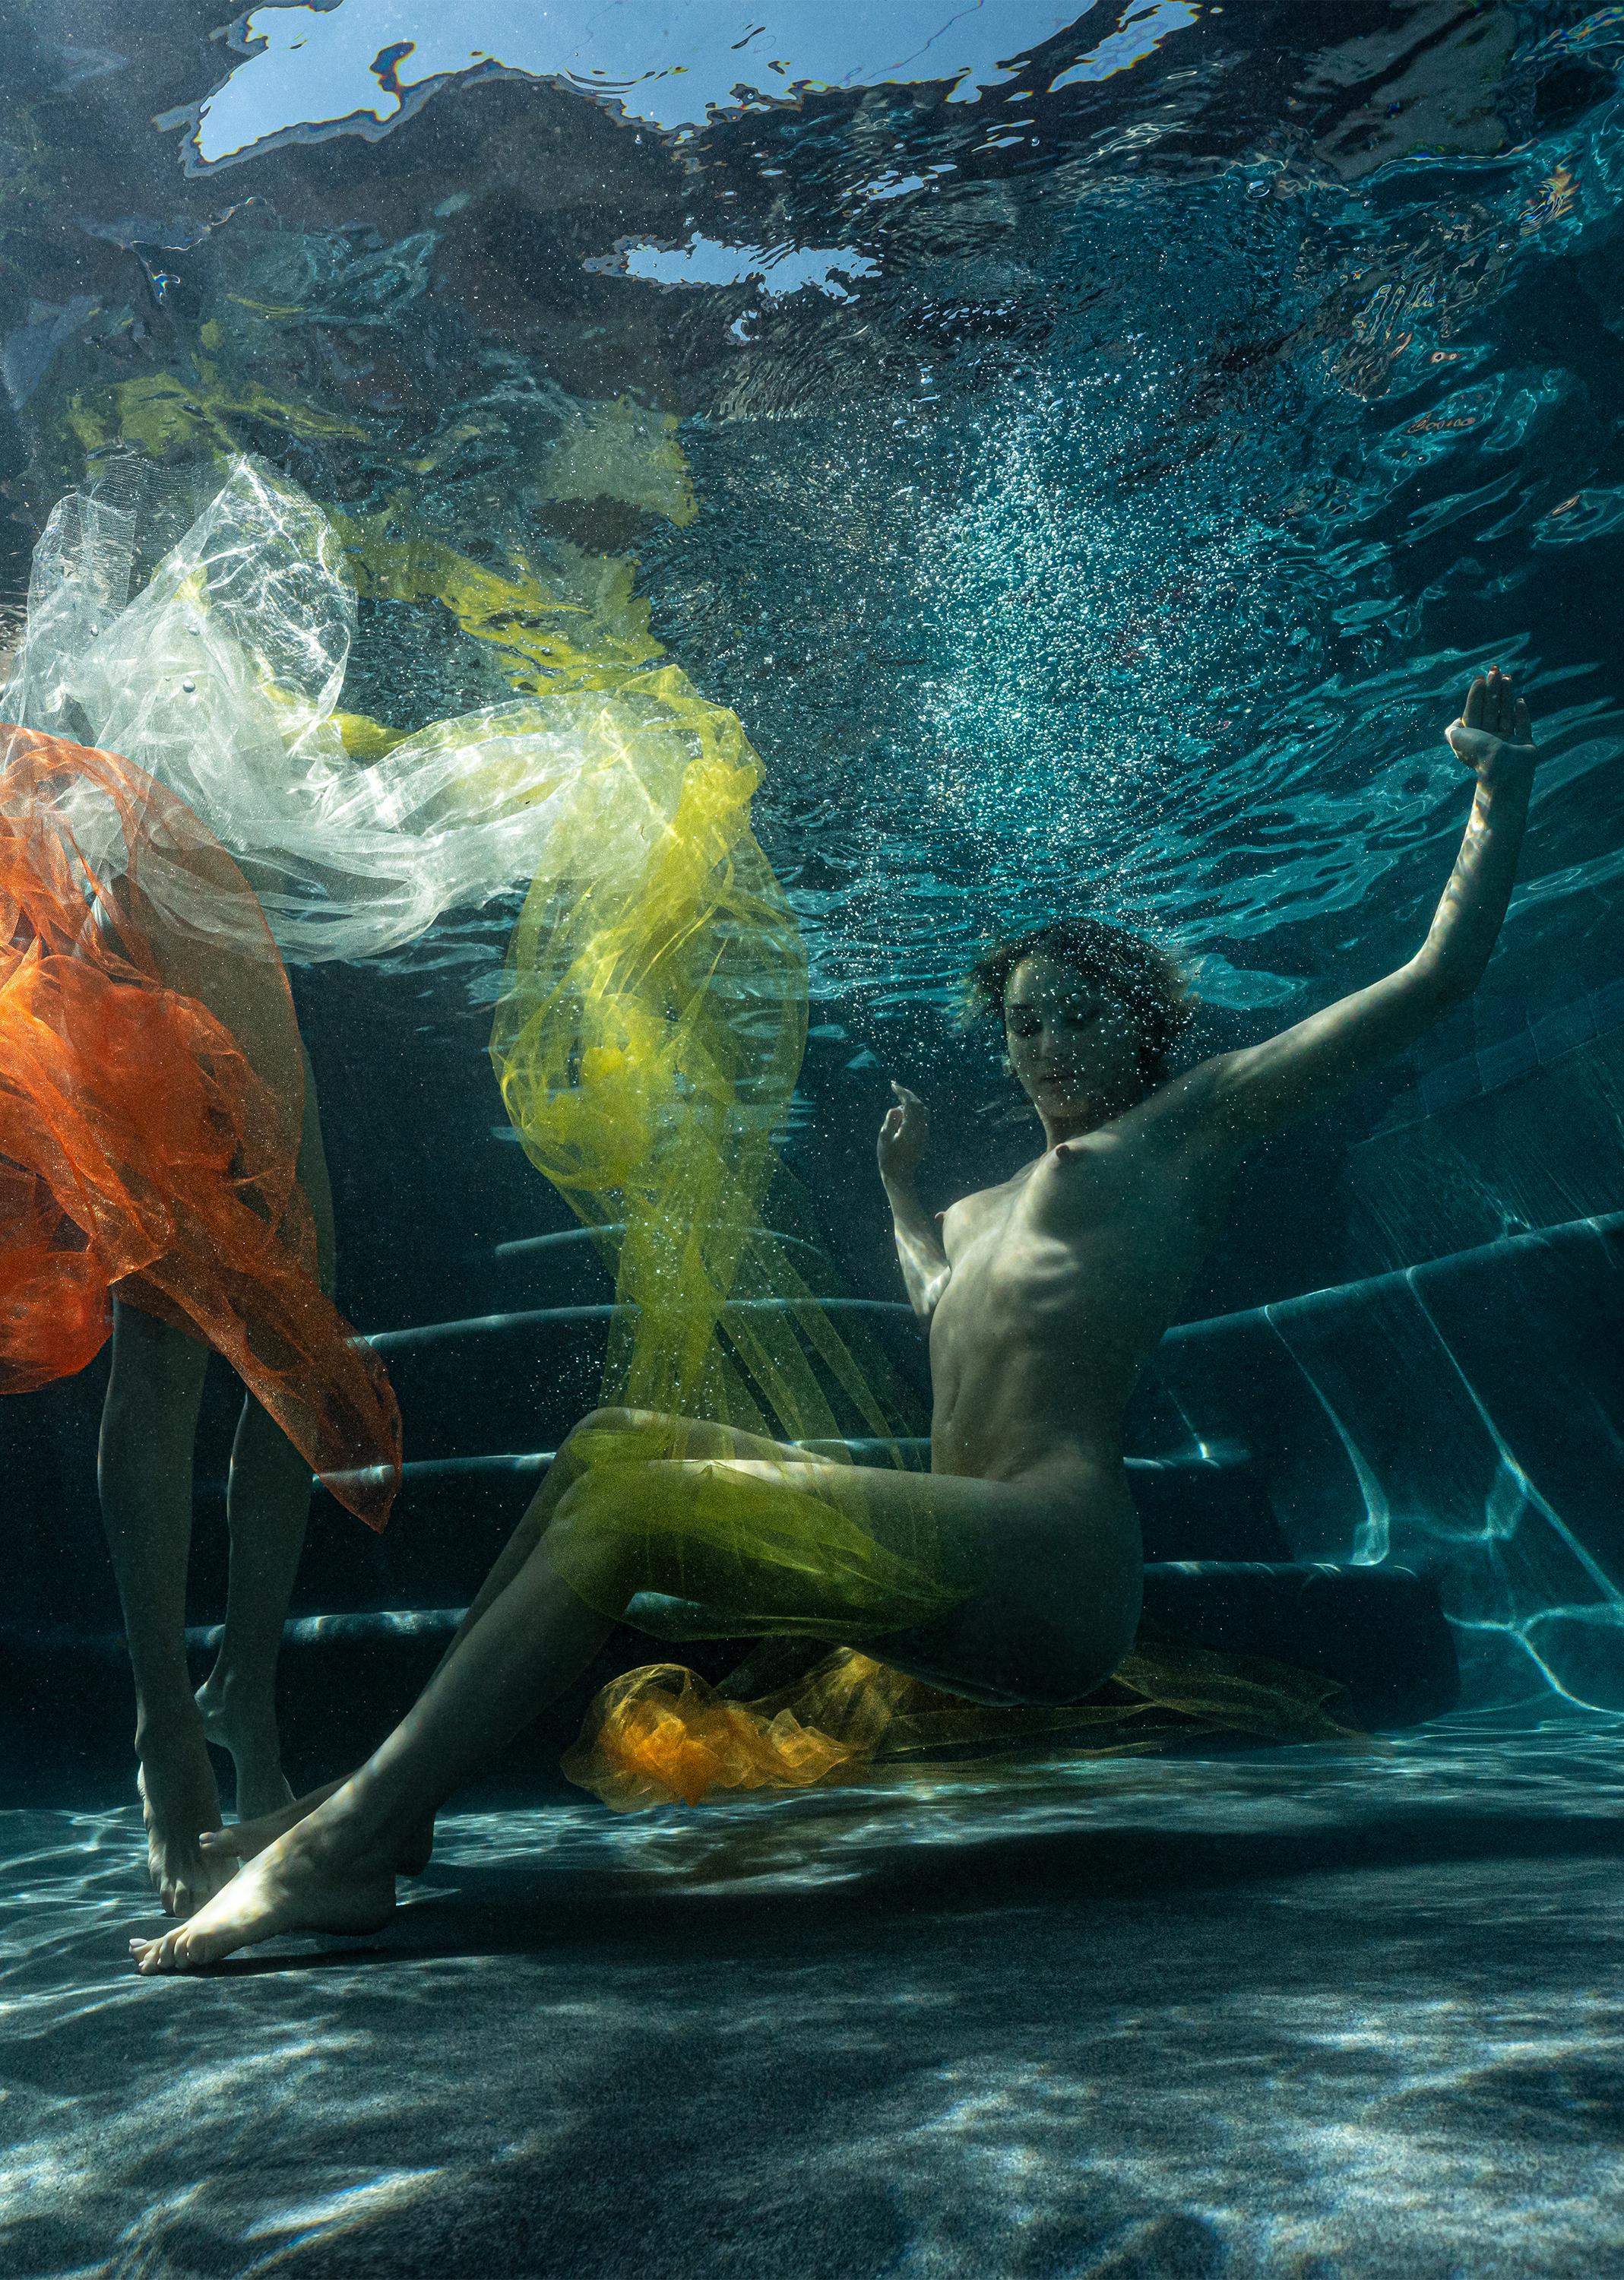 Pool Party IX - underwater nude photograph - archival pigment print 16x24